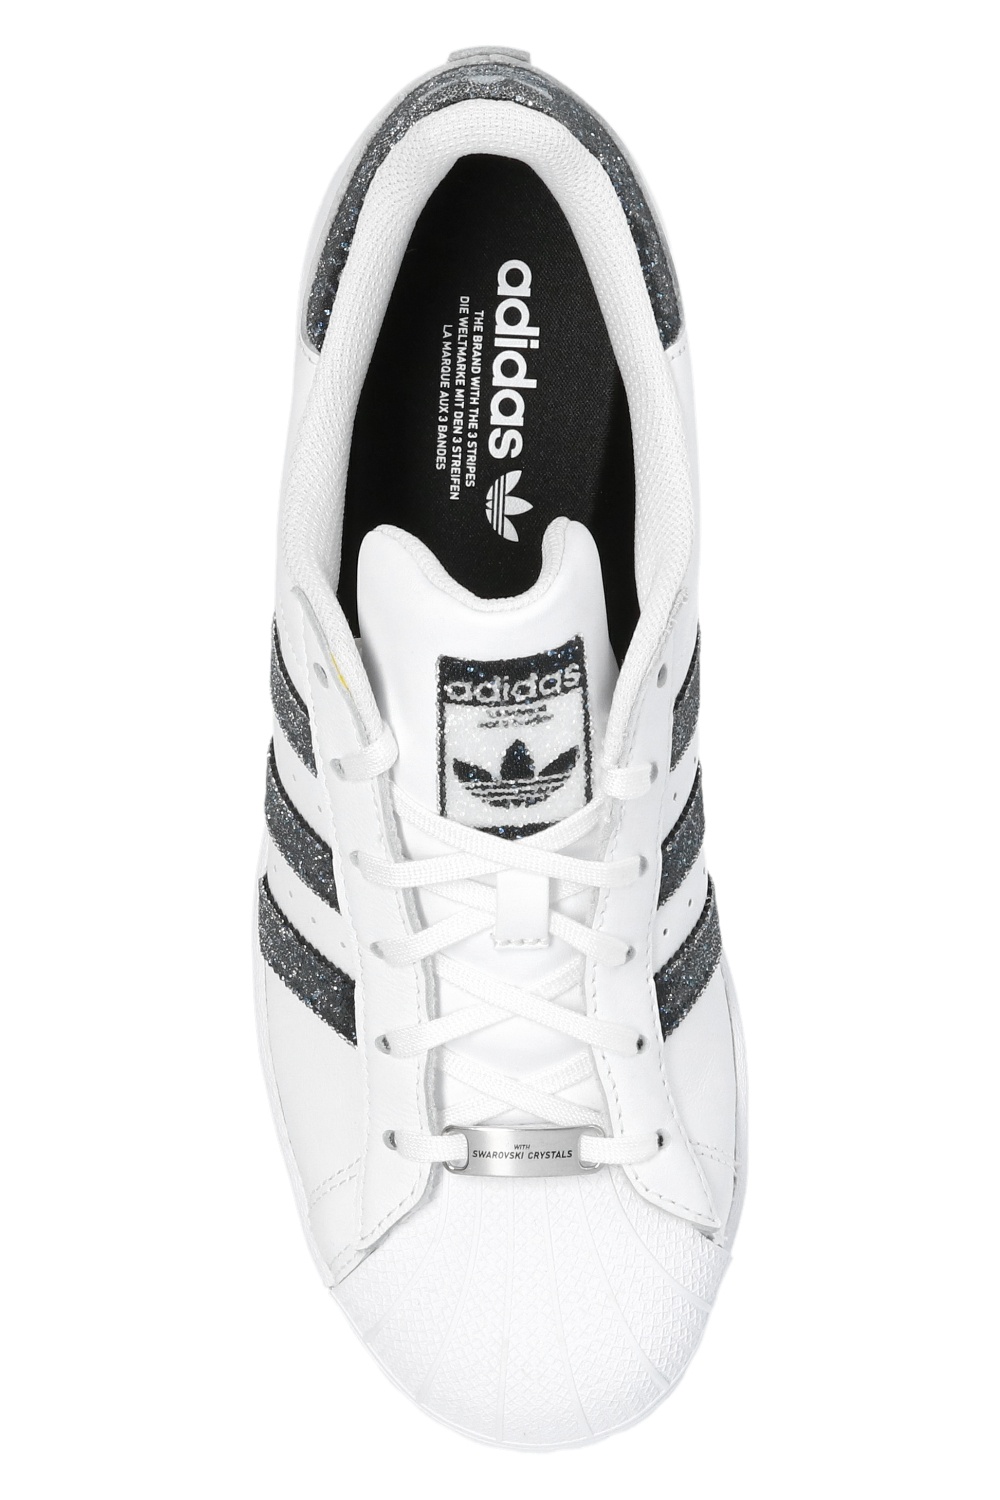 Vitkac Germany White ADIDAS sneakers - \'Superstar\' Originals